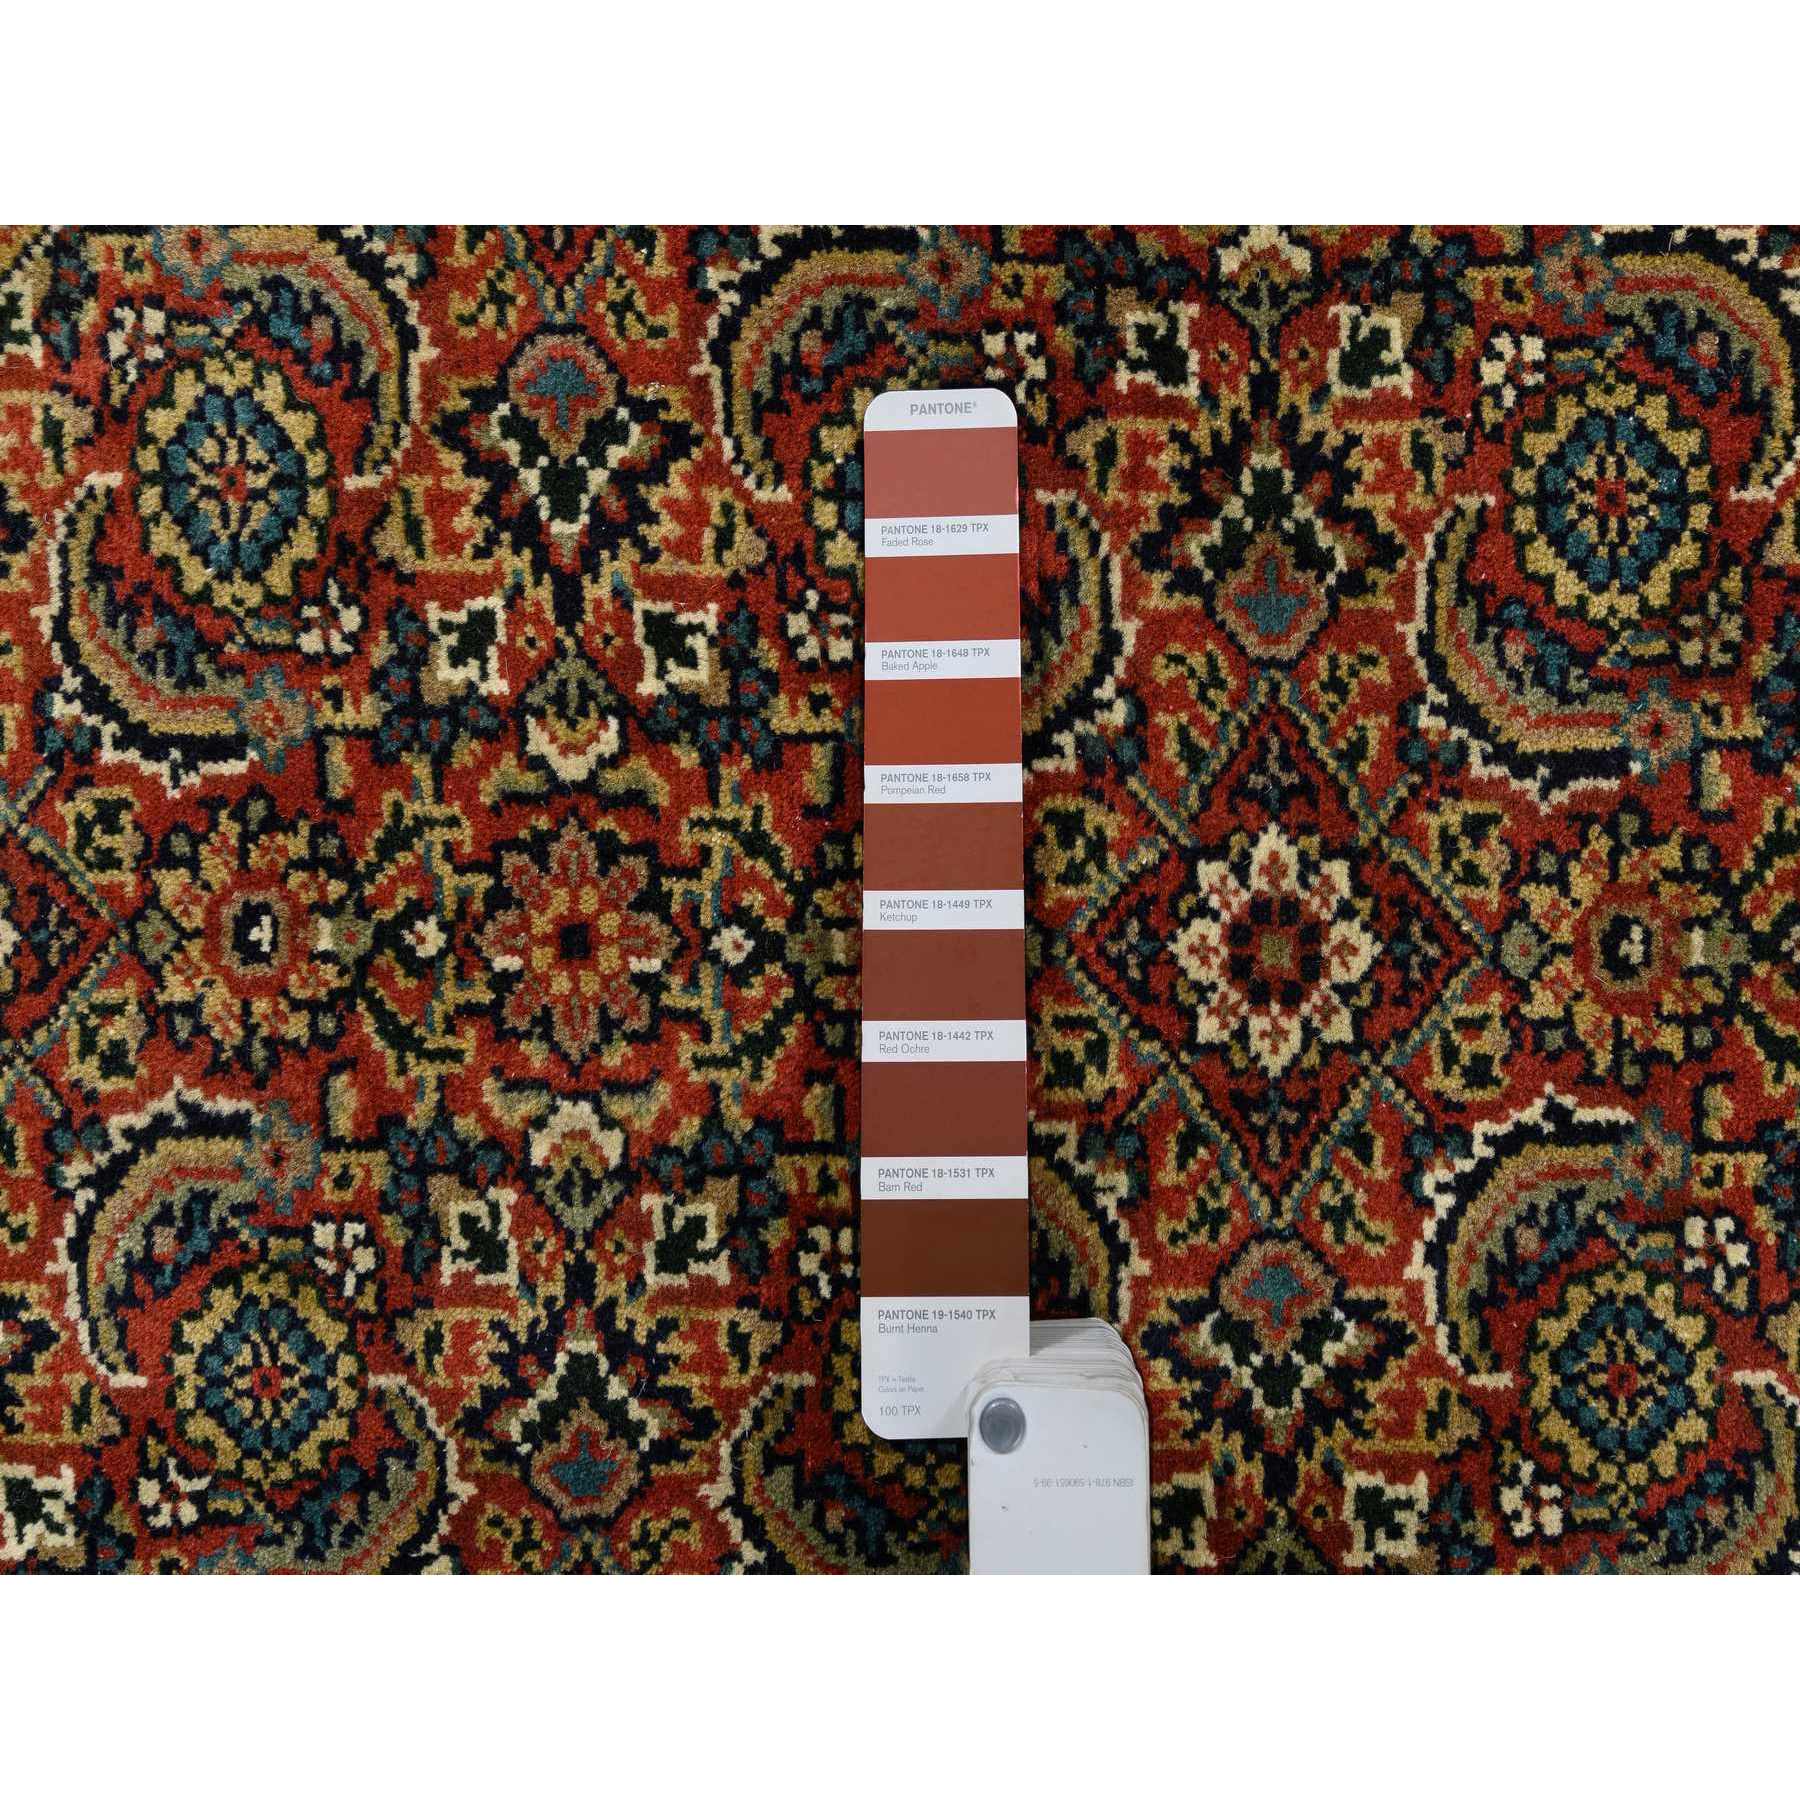 4'10"x4'10" 175 KPSI Hand Woven Brick Red Herati All Over Fish Design Luxurious Wool and Silk Oriental Round Rug 